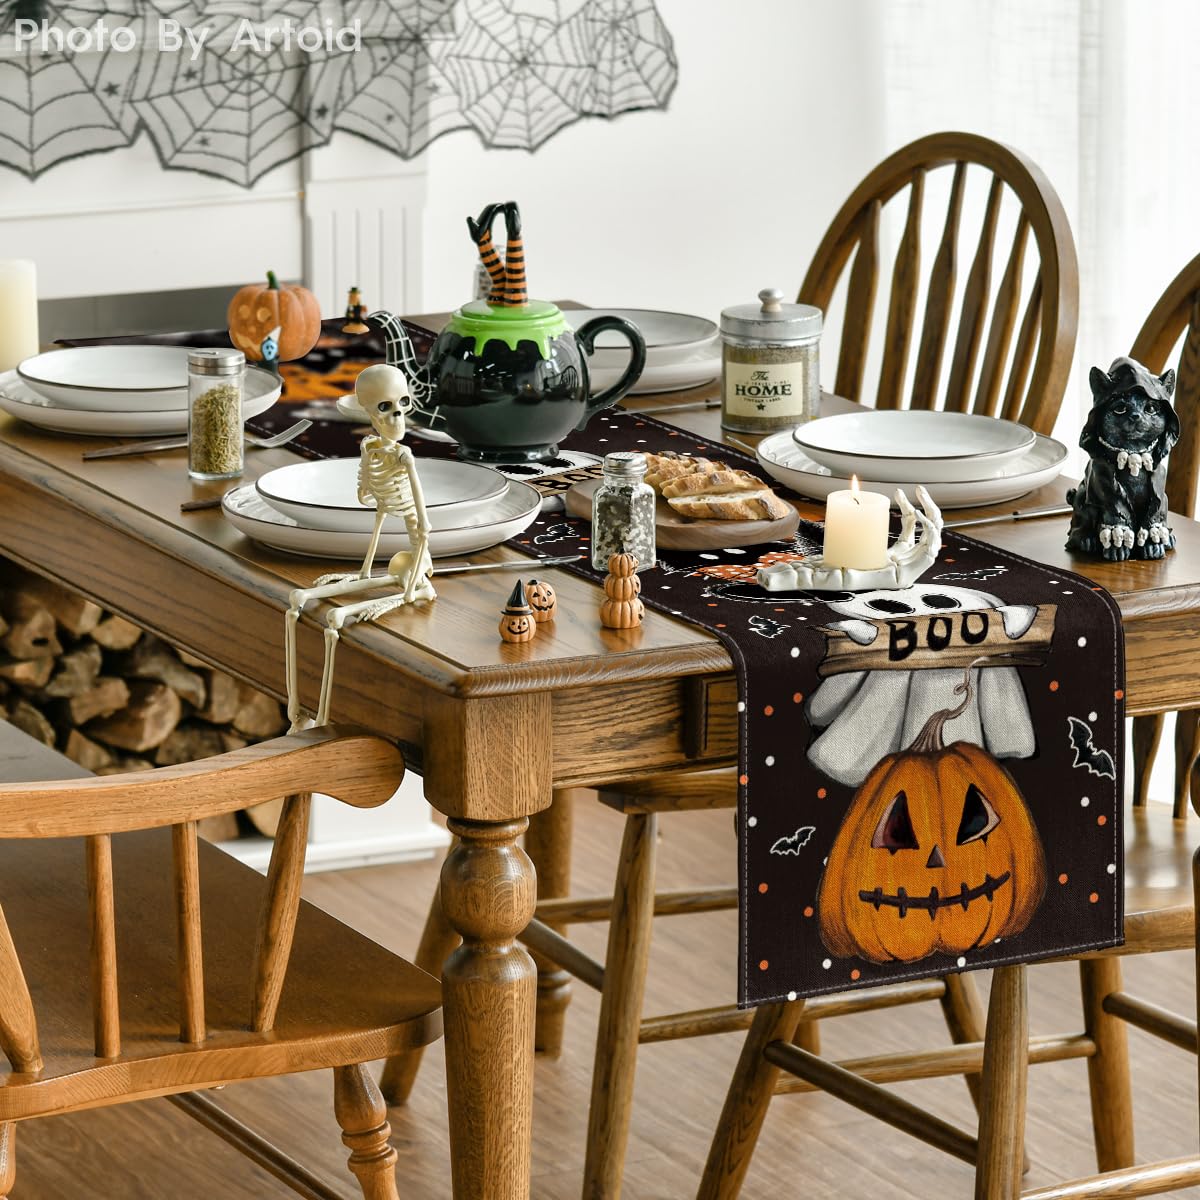 Artoid Mode Polka Dot Ghost Pumpkin Cat Boo Halloween Table Runner, Bat Seasonal Fall Kitchen Dining Table Decoration for Home Party Decor 13x72 Inch